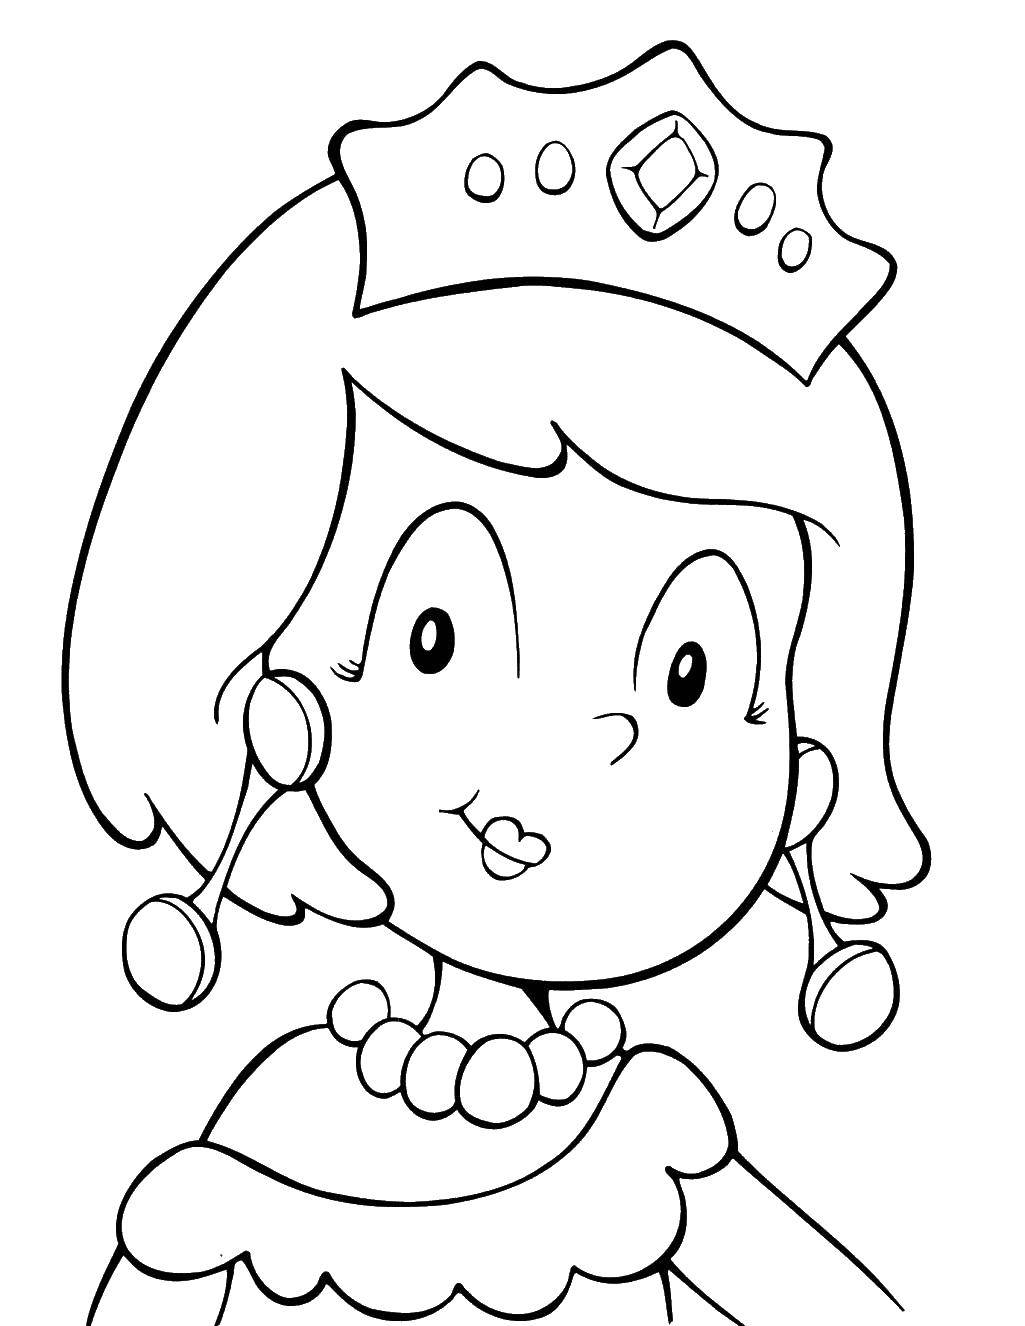 Coloring Princess. Category Princess. Tags:  Princess.